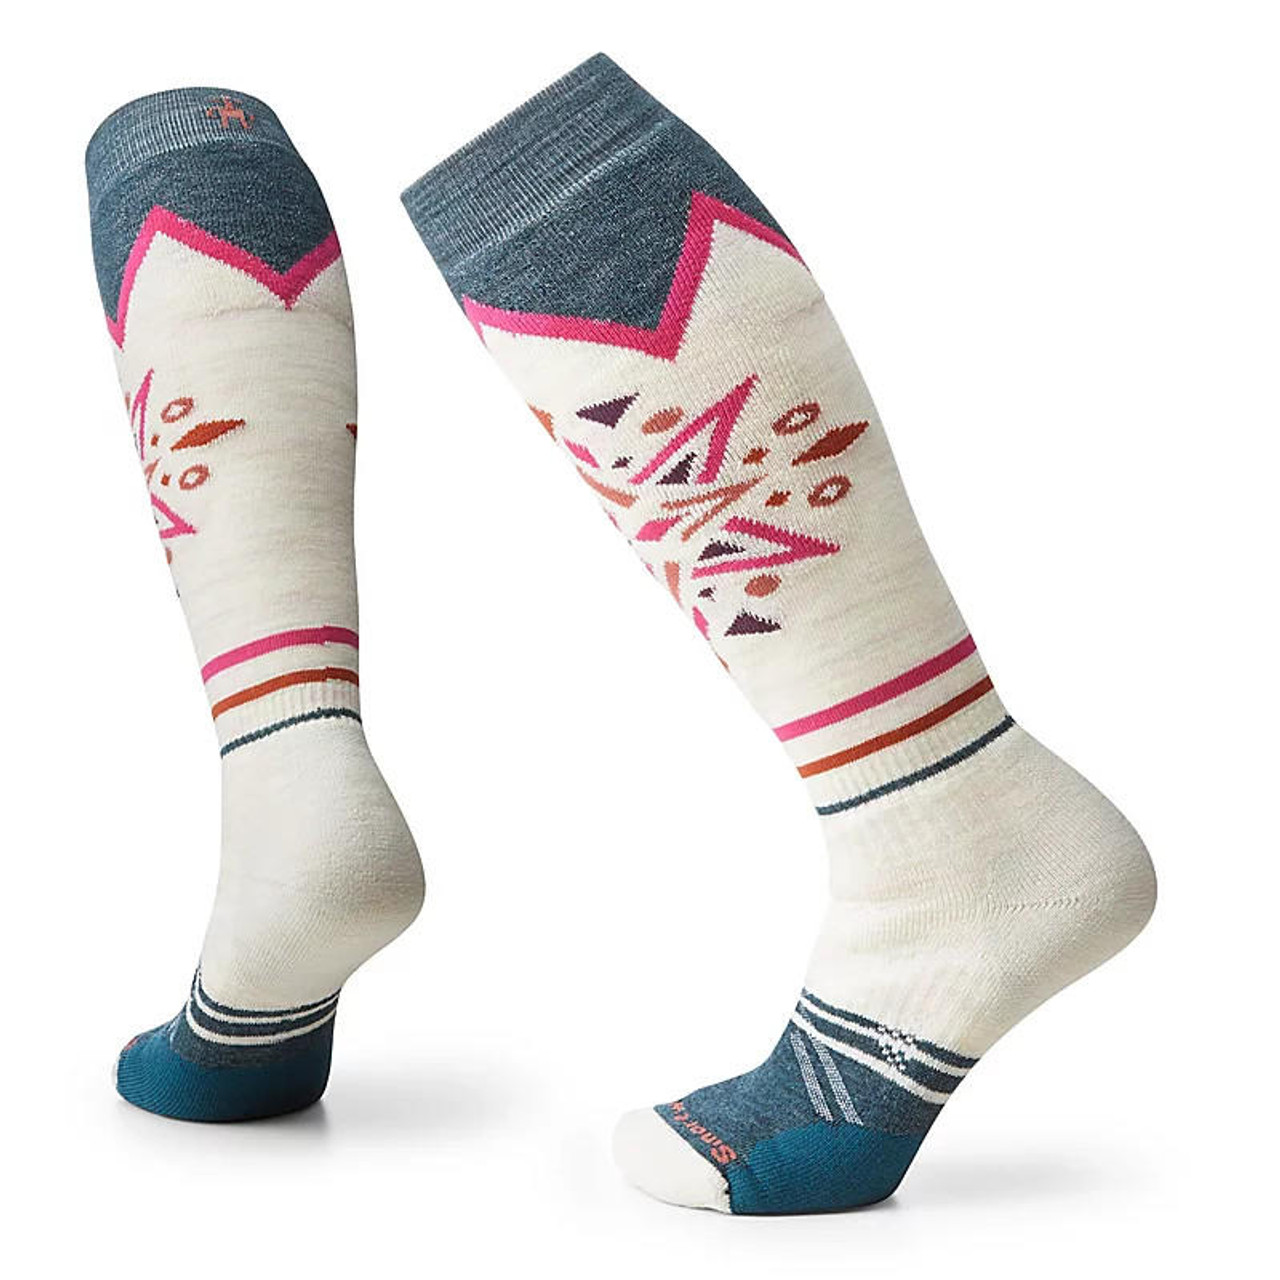 Paloma - Snowboard/Ski Socks for Women